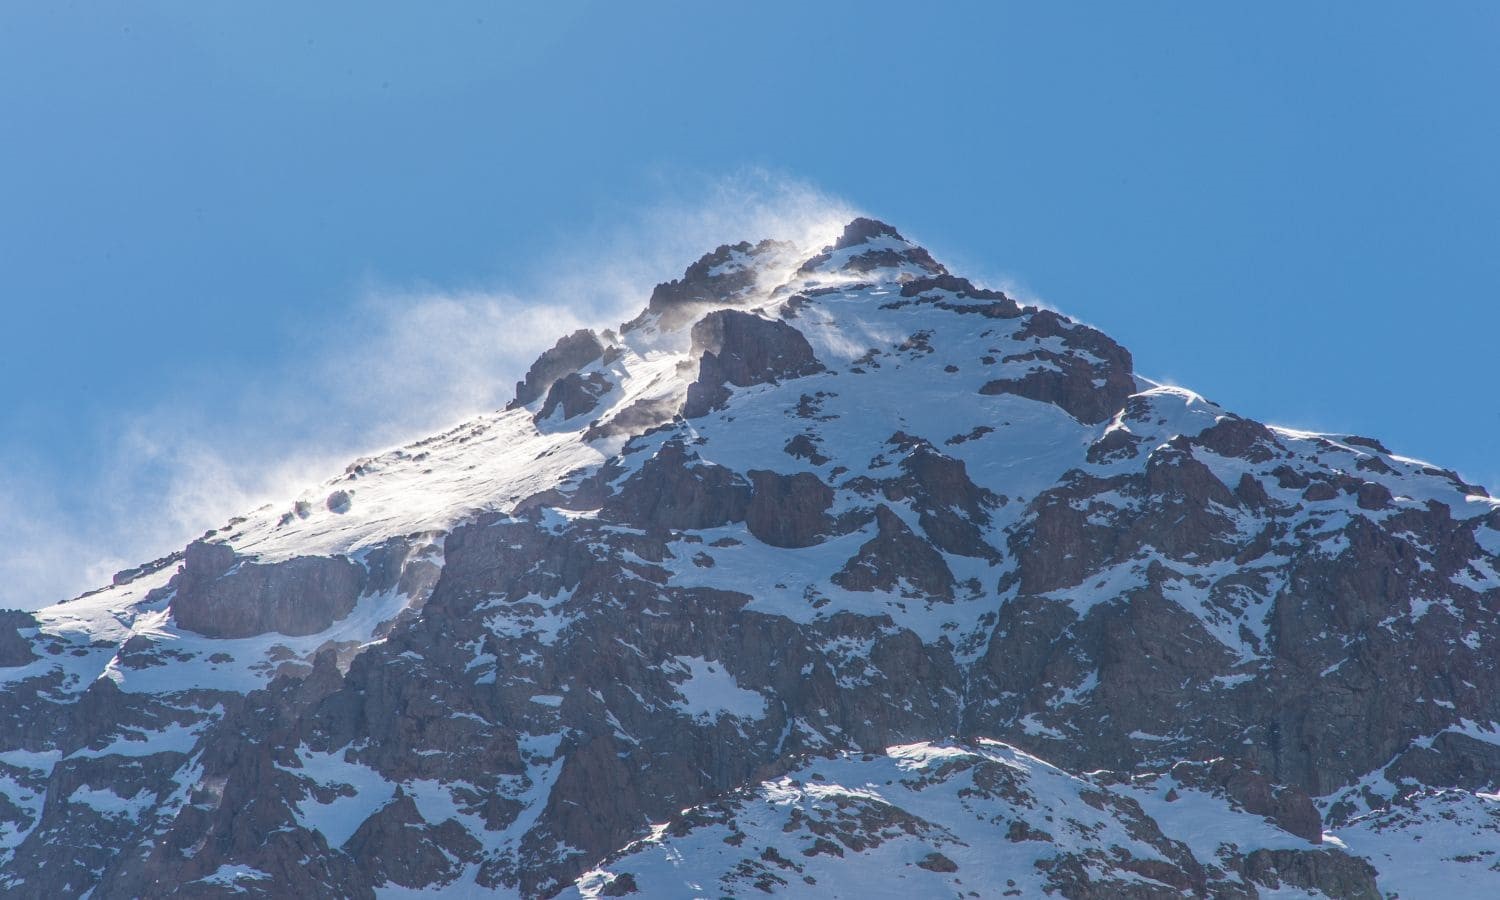 Mount Toubkal, highest peak in North Africa